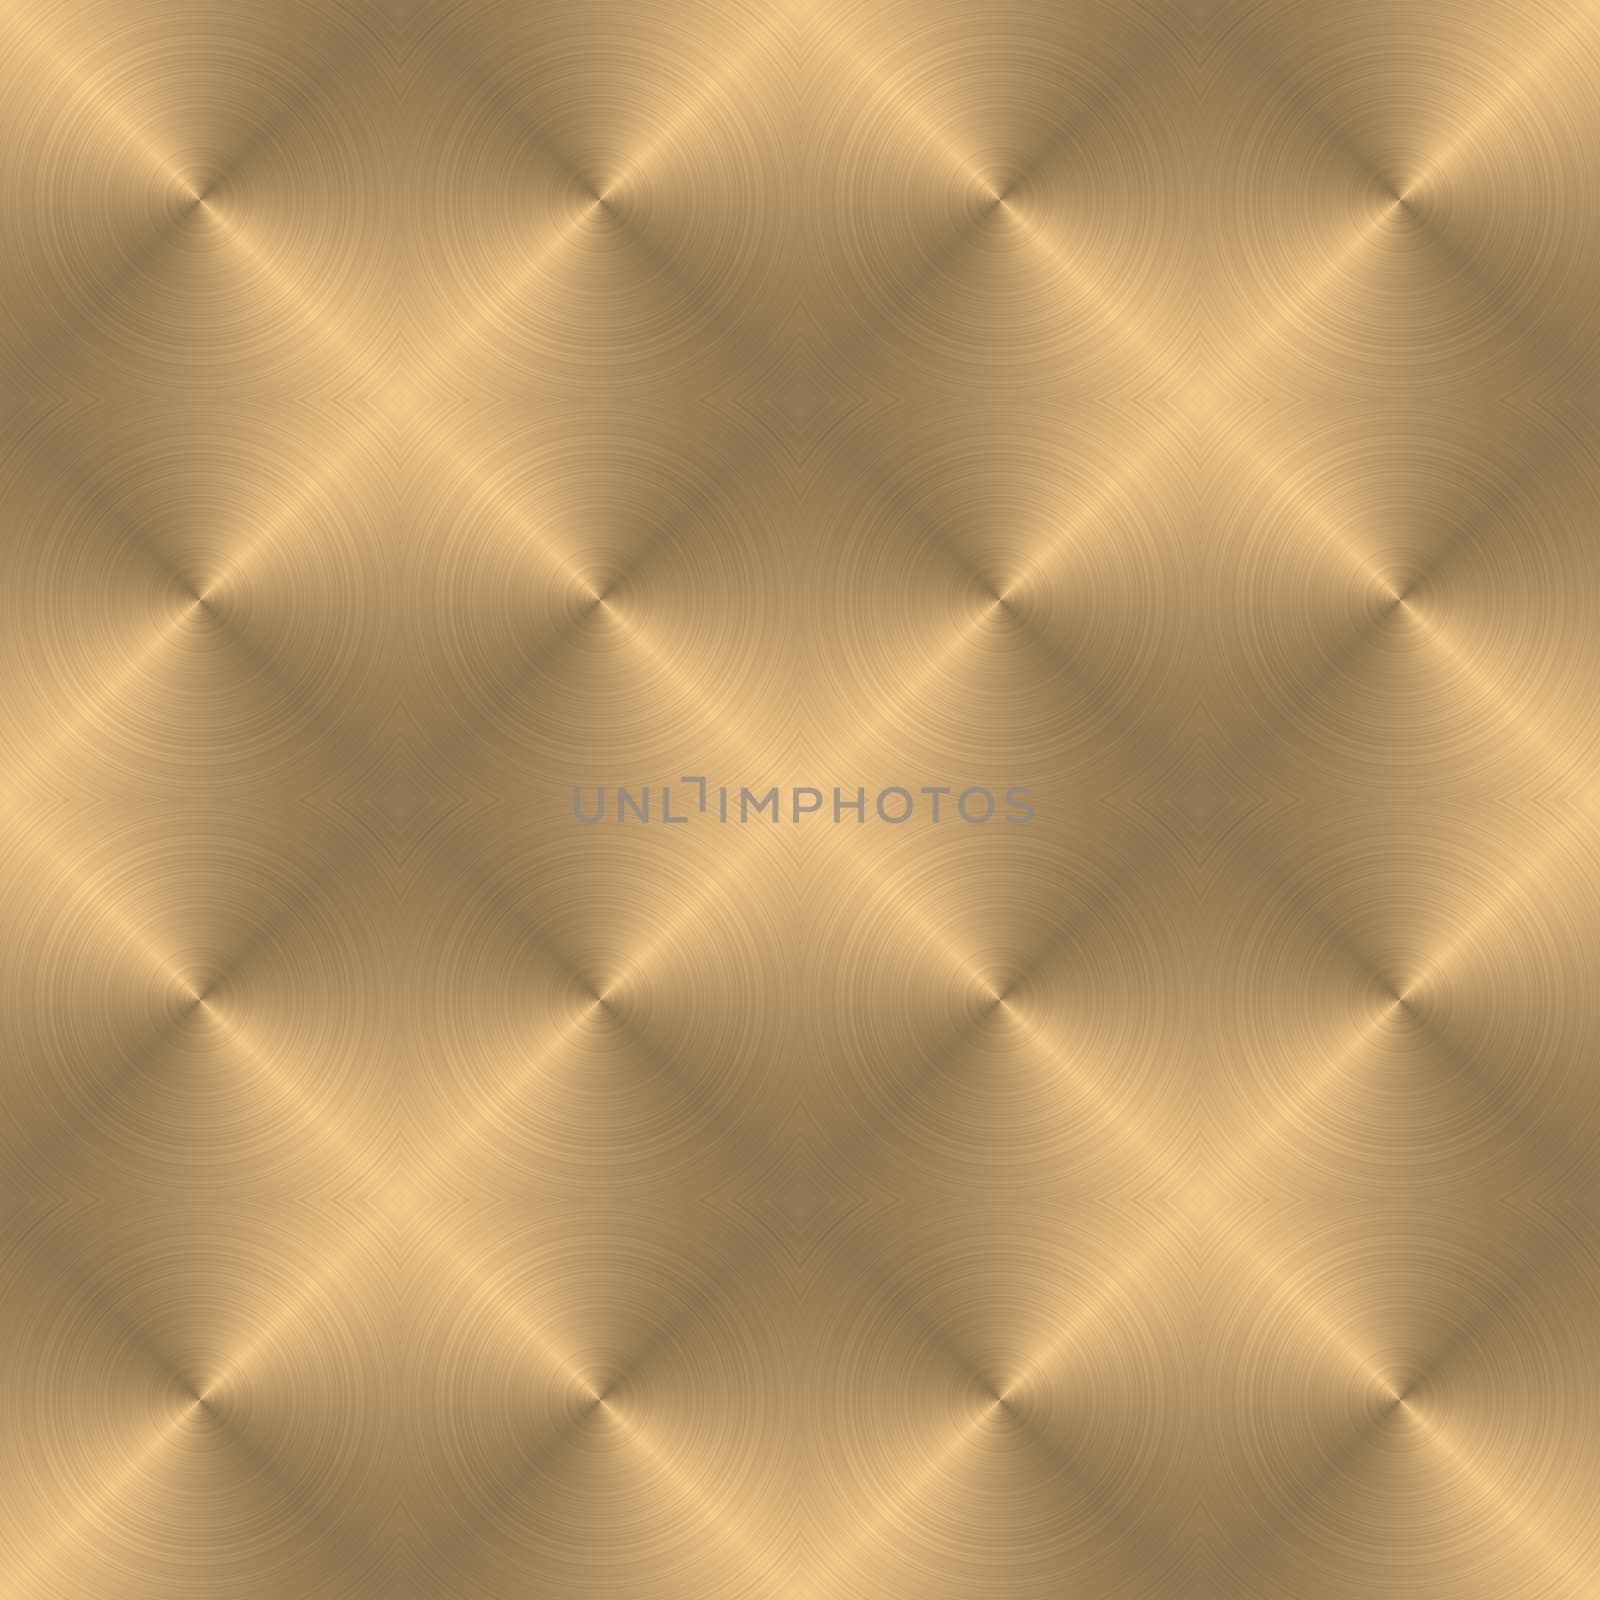 brushed golden metallic background with handbrushed look